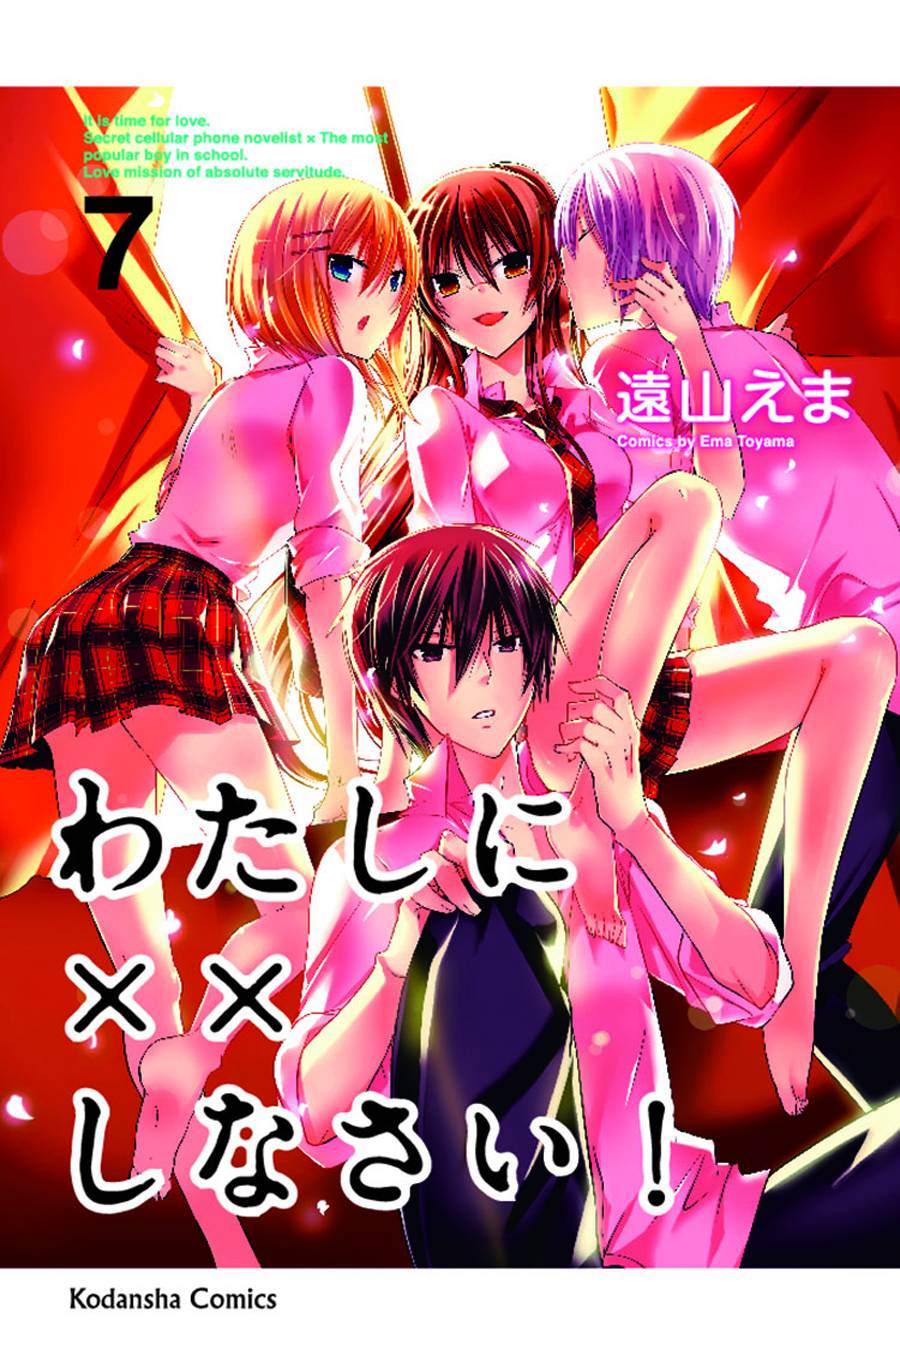 Missions of Love Manga Volume 7